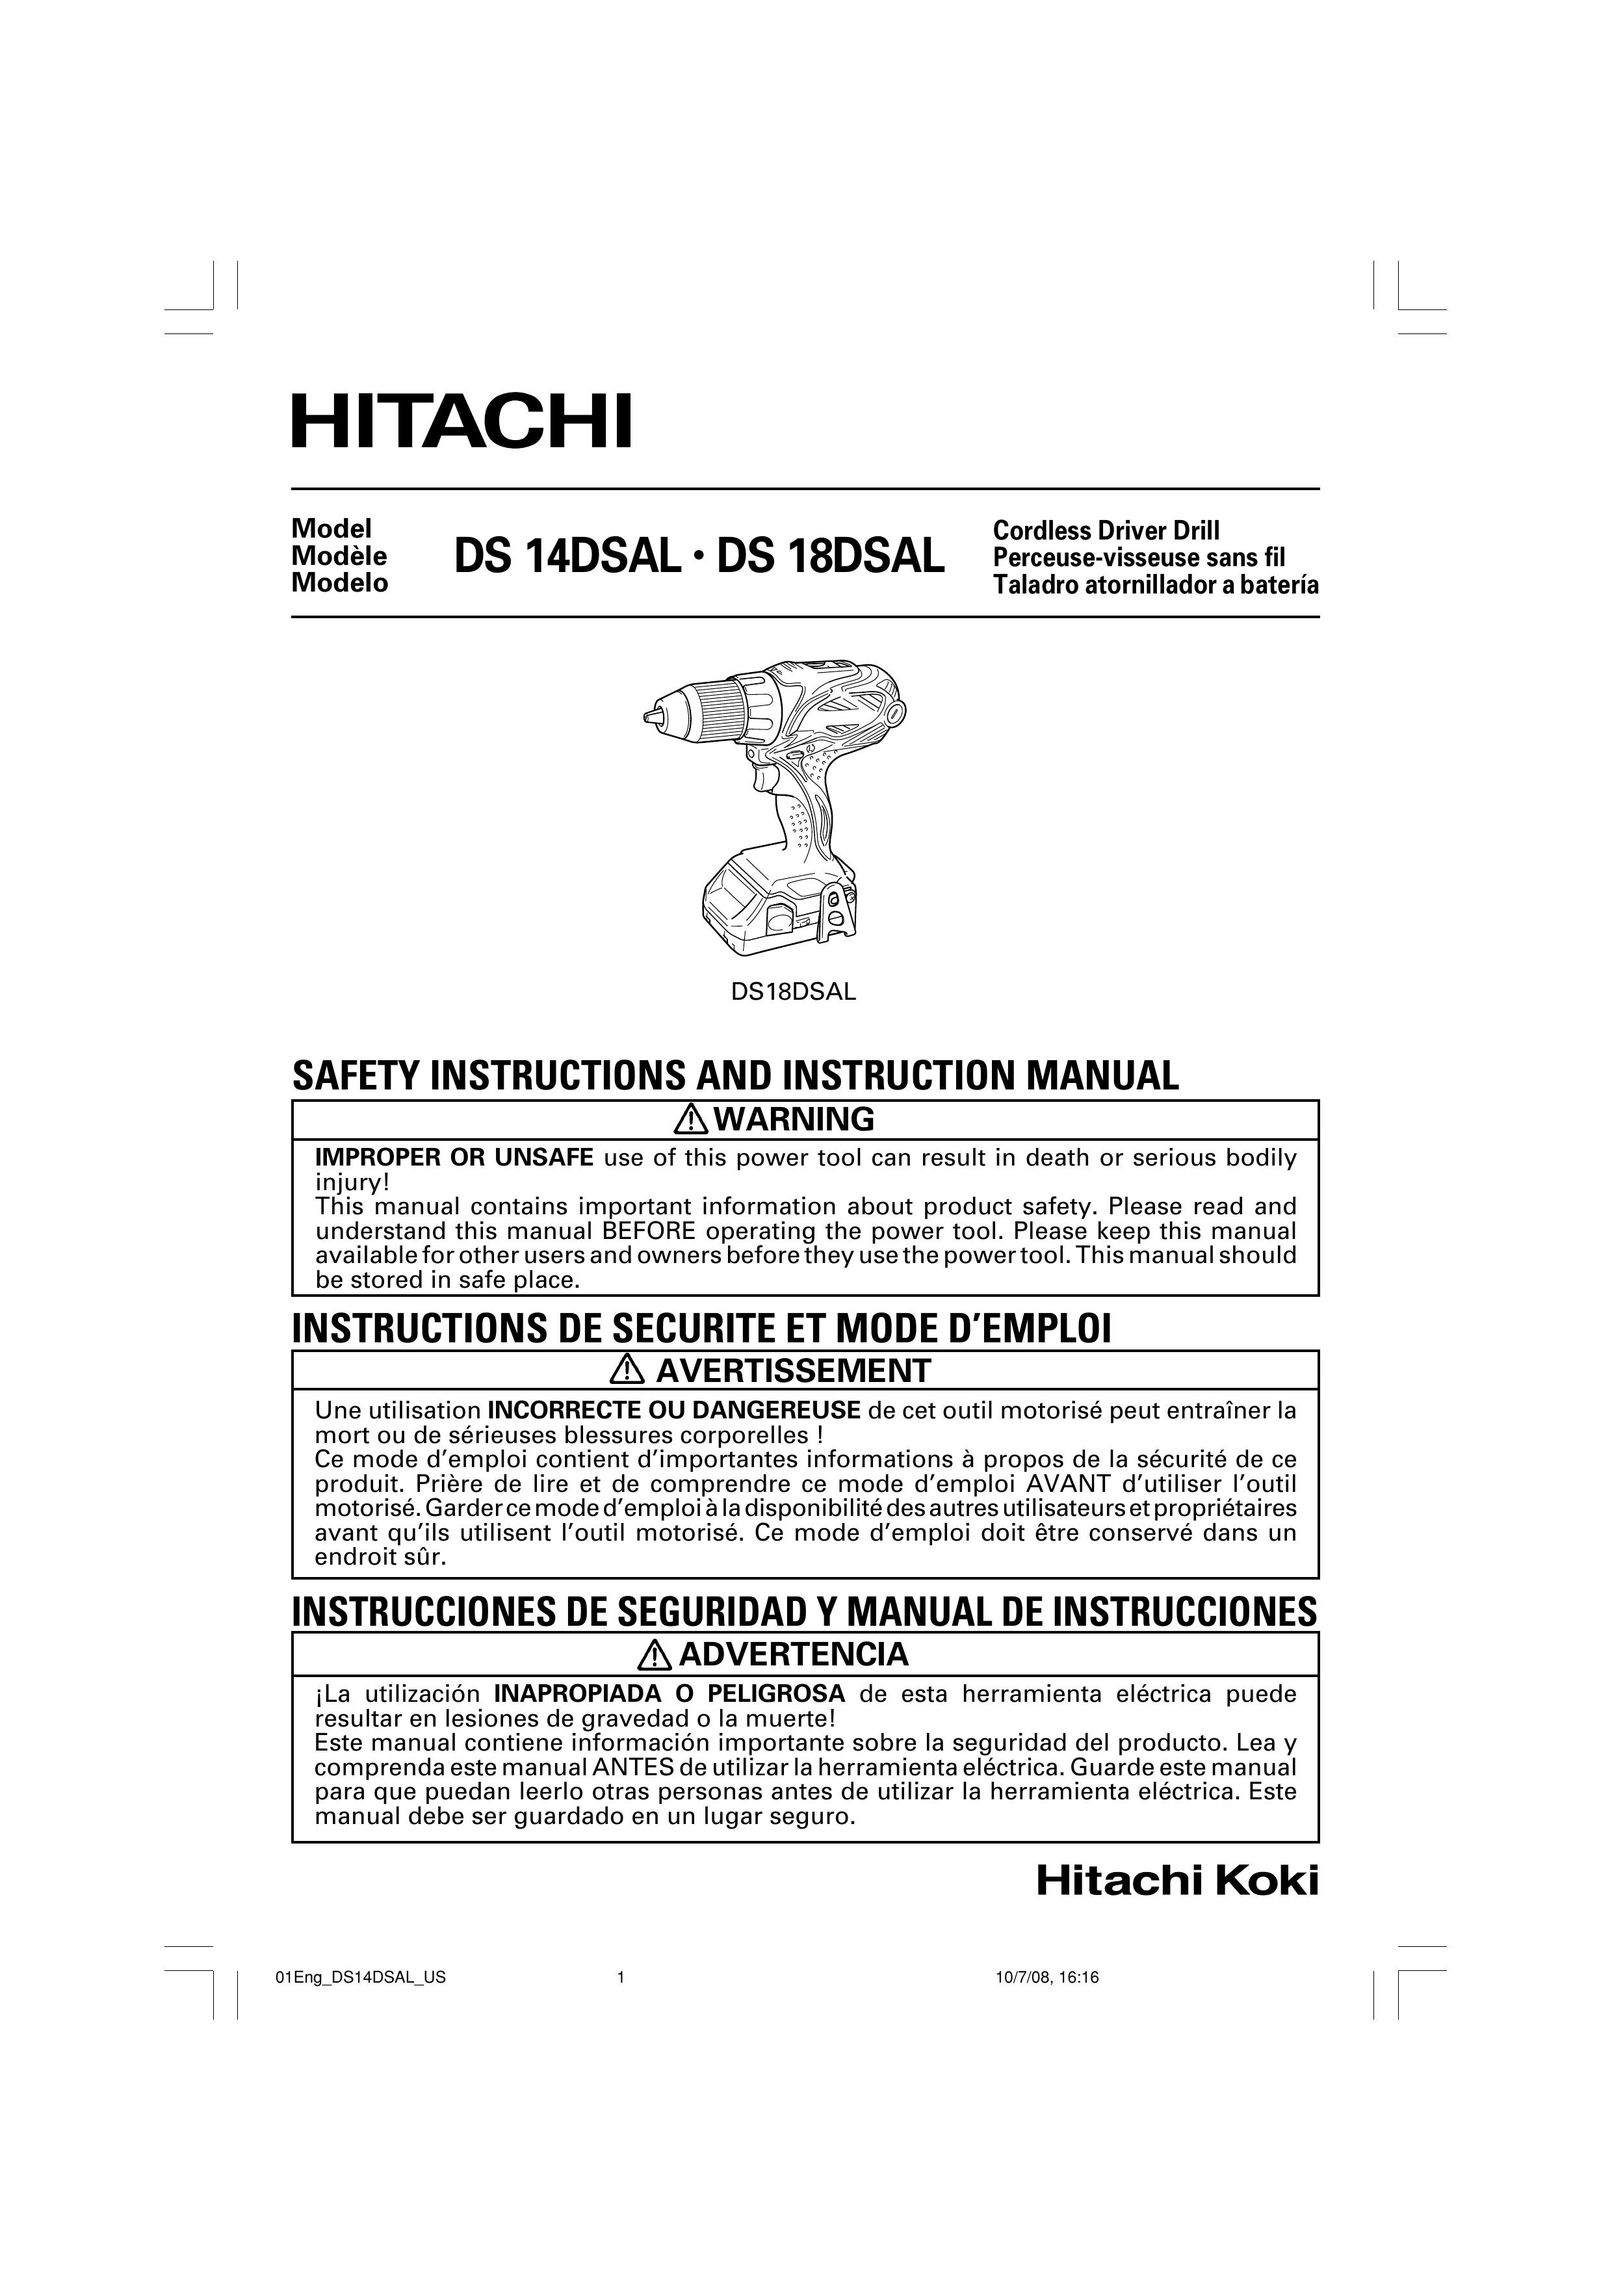 Hitachi DS 14DSAL Cordless Drill User Manual